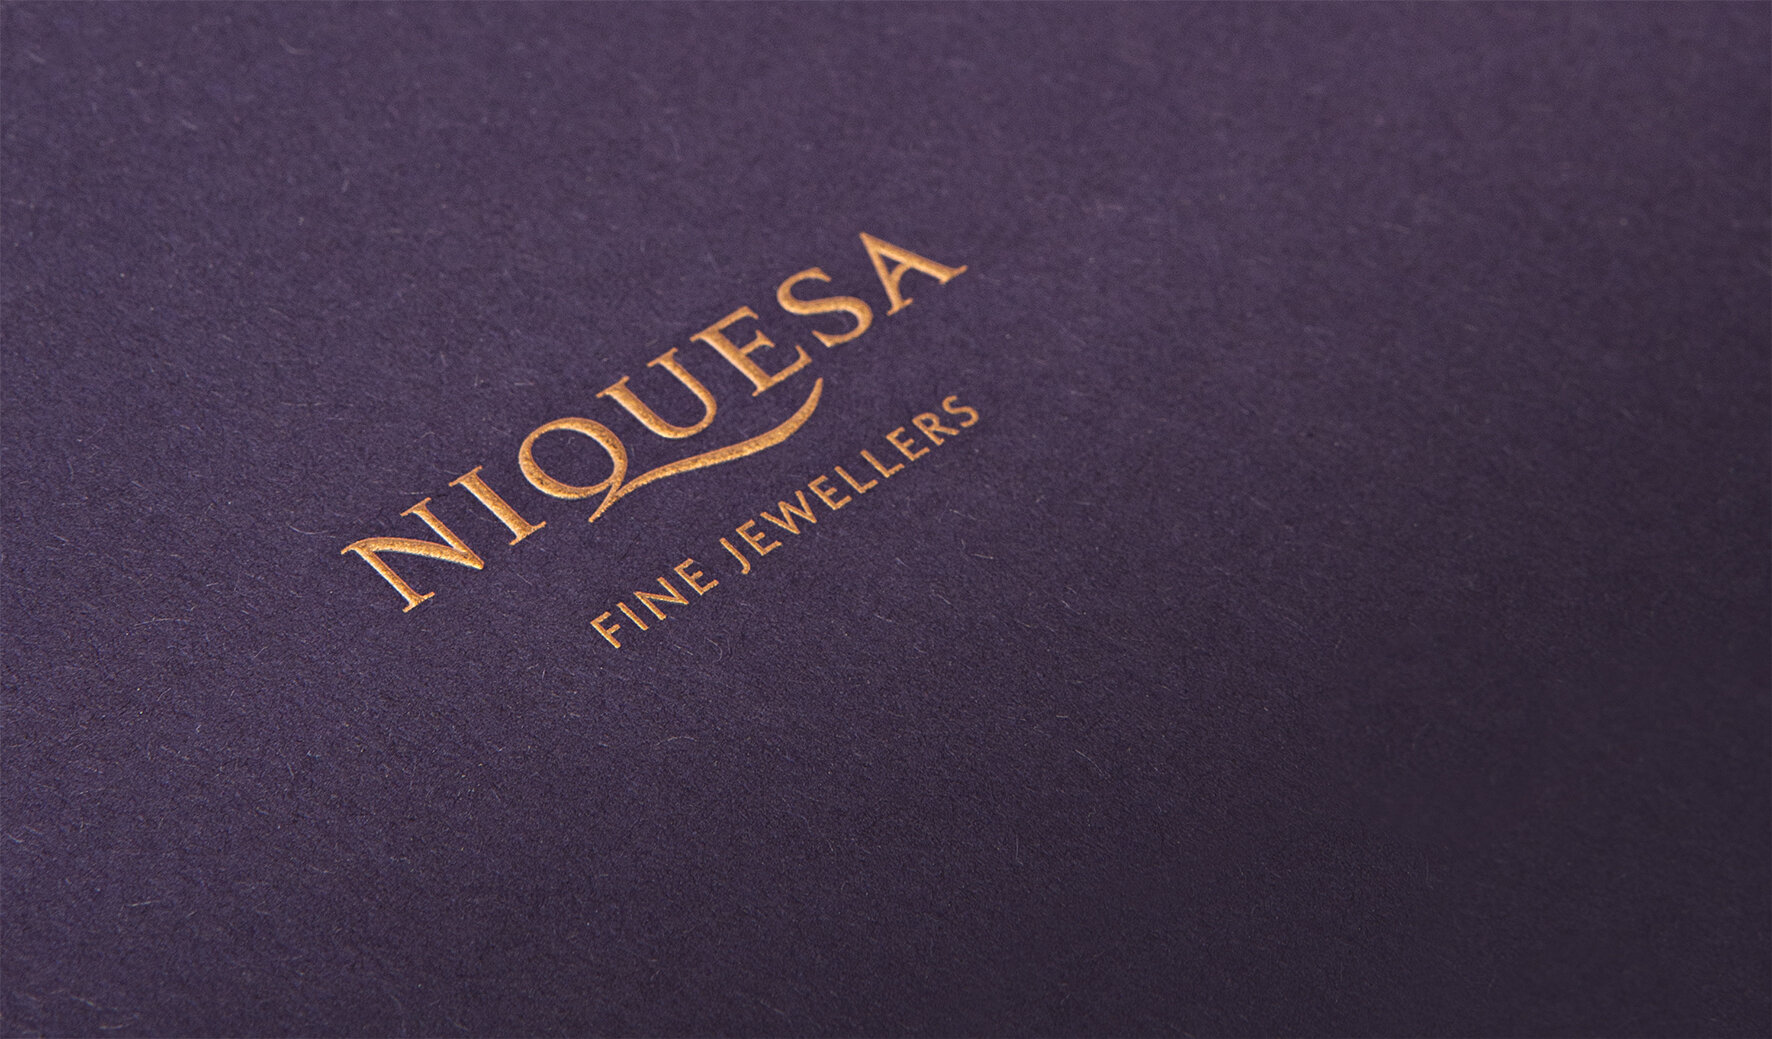 Niquesa hotels and jewellery Andy Bain luxury branding design